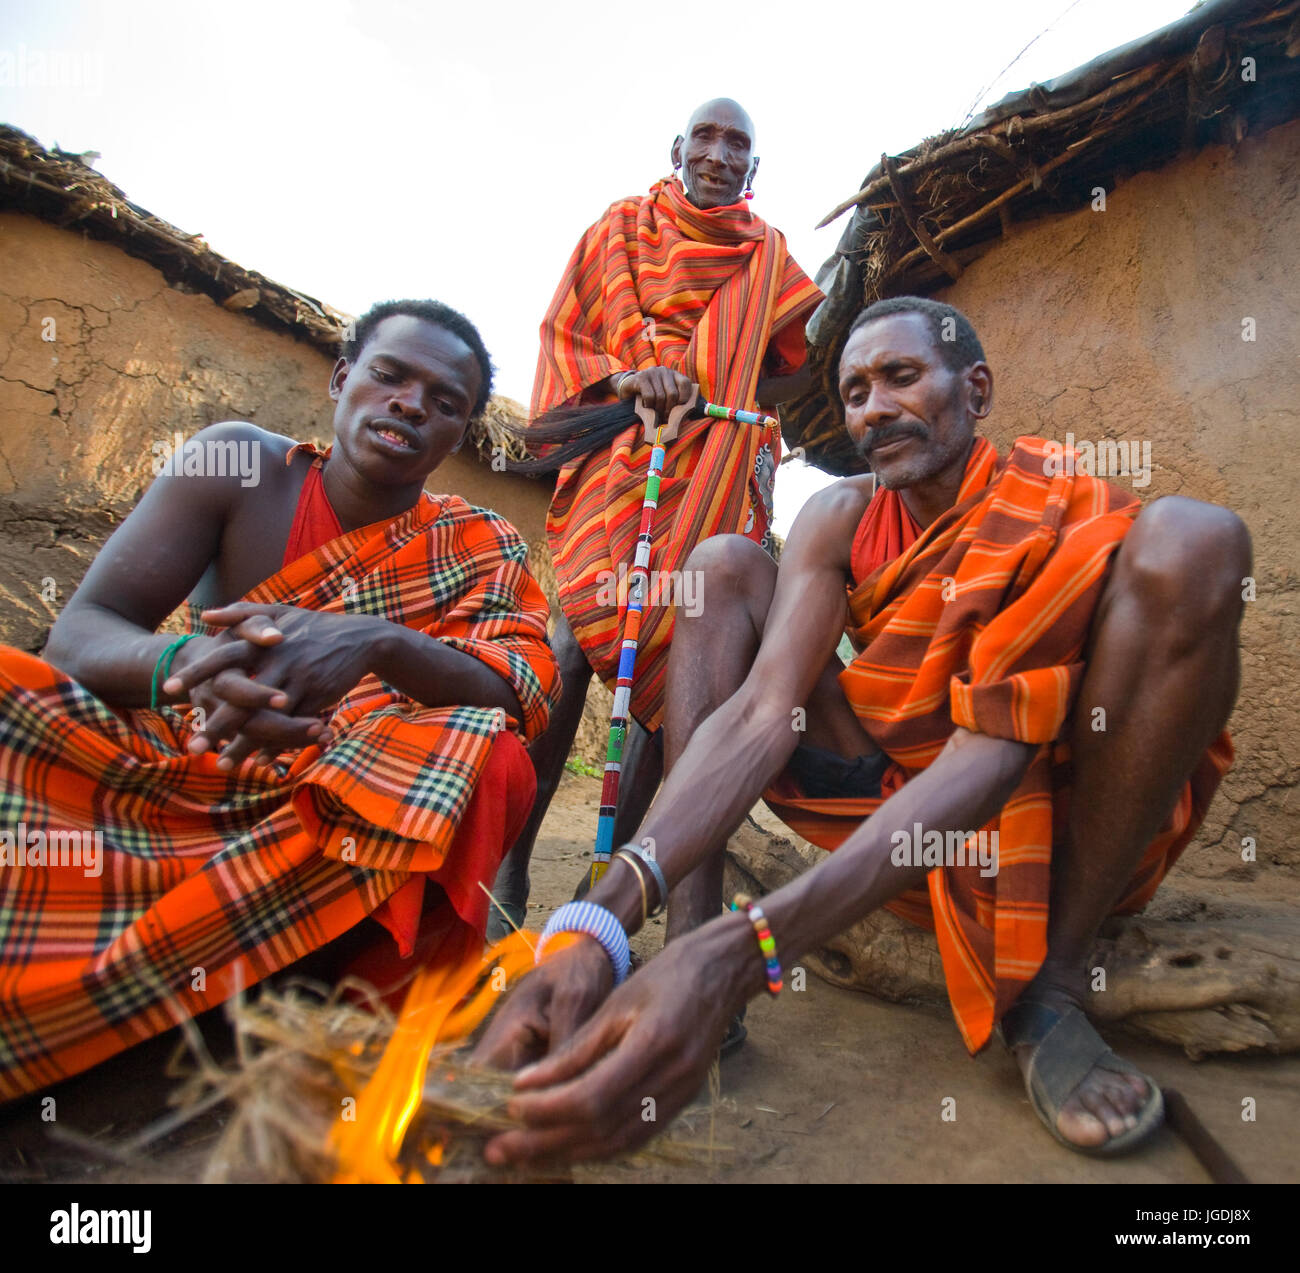 KENYA, MASAI MARA - JULY 19, 2011: Men Masai tribe make a fire in the traditional way. Stock Photo